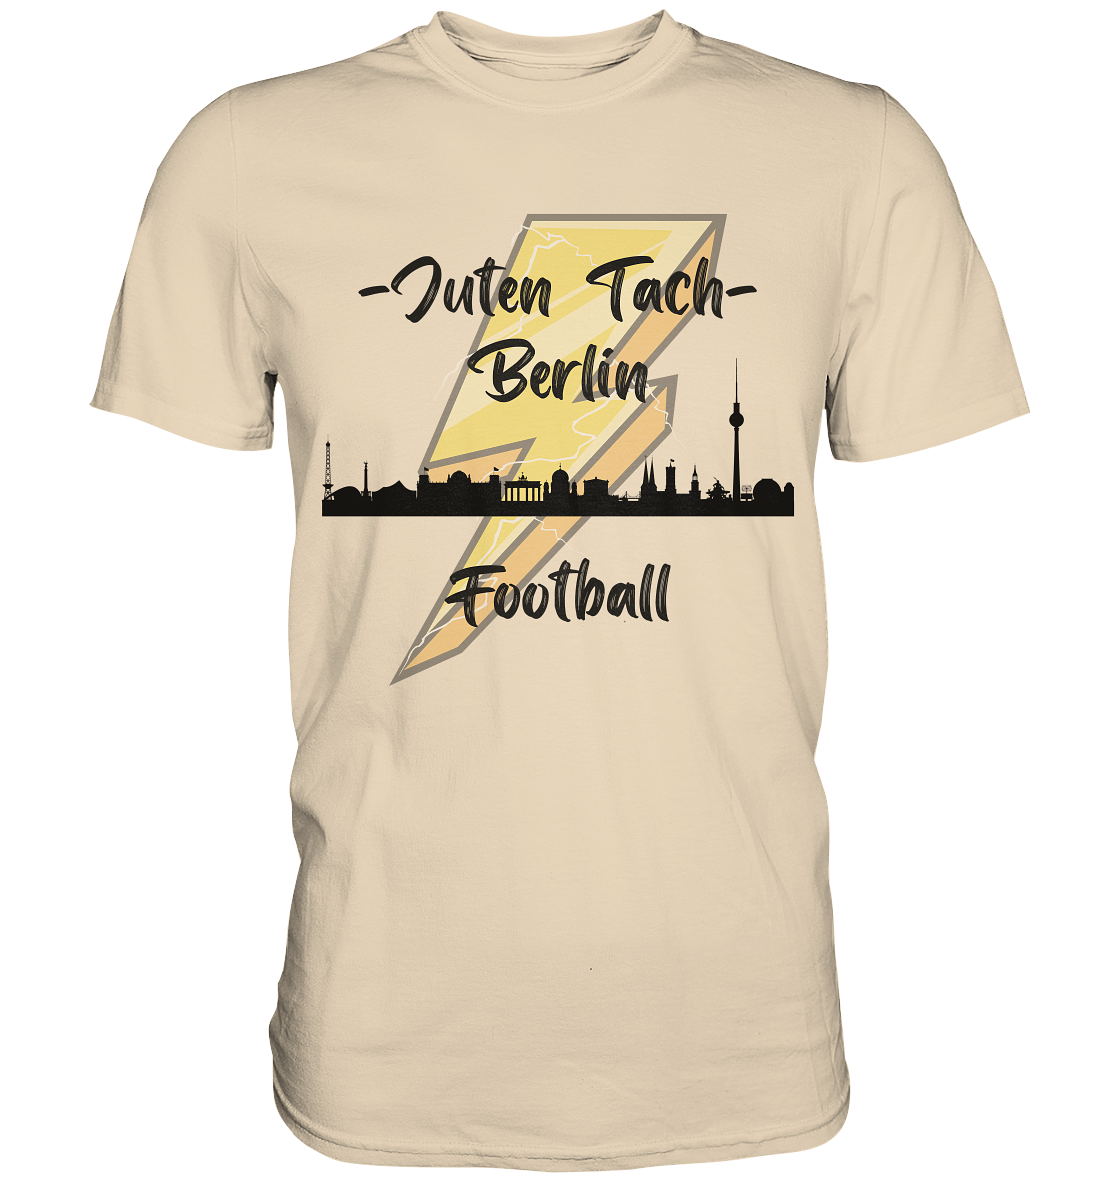 Juten Tach - Berlin Football - Premium Shirt - Football Unity Football Unity